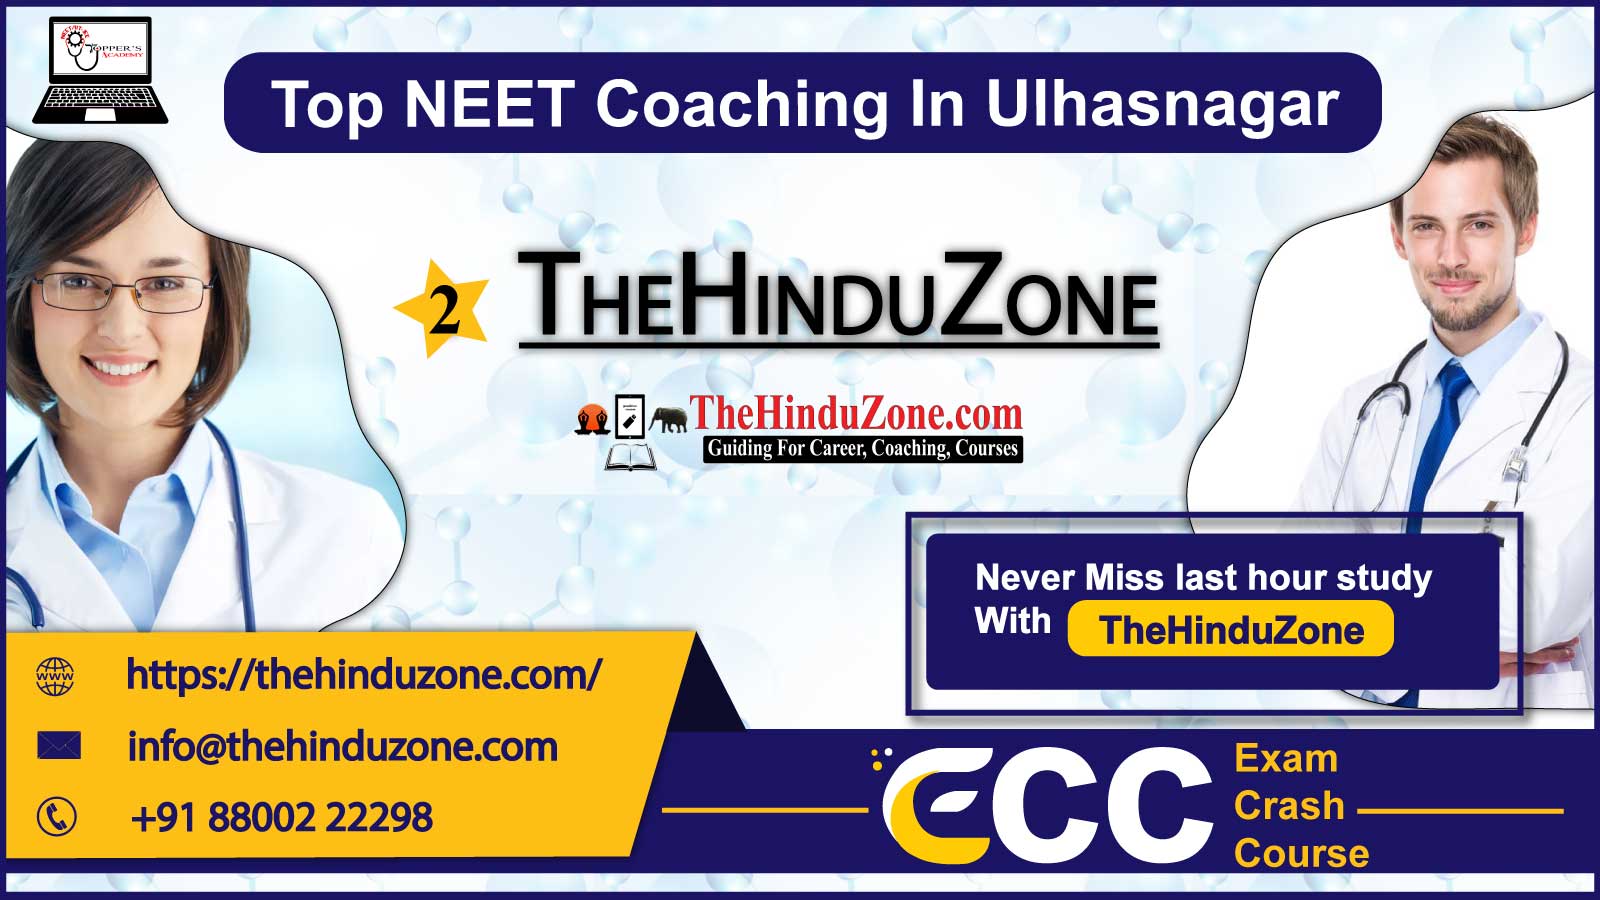 The Hinduzone NEET Coaching in Ulhasnagar